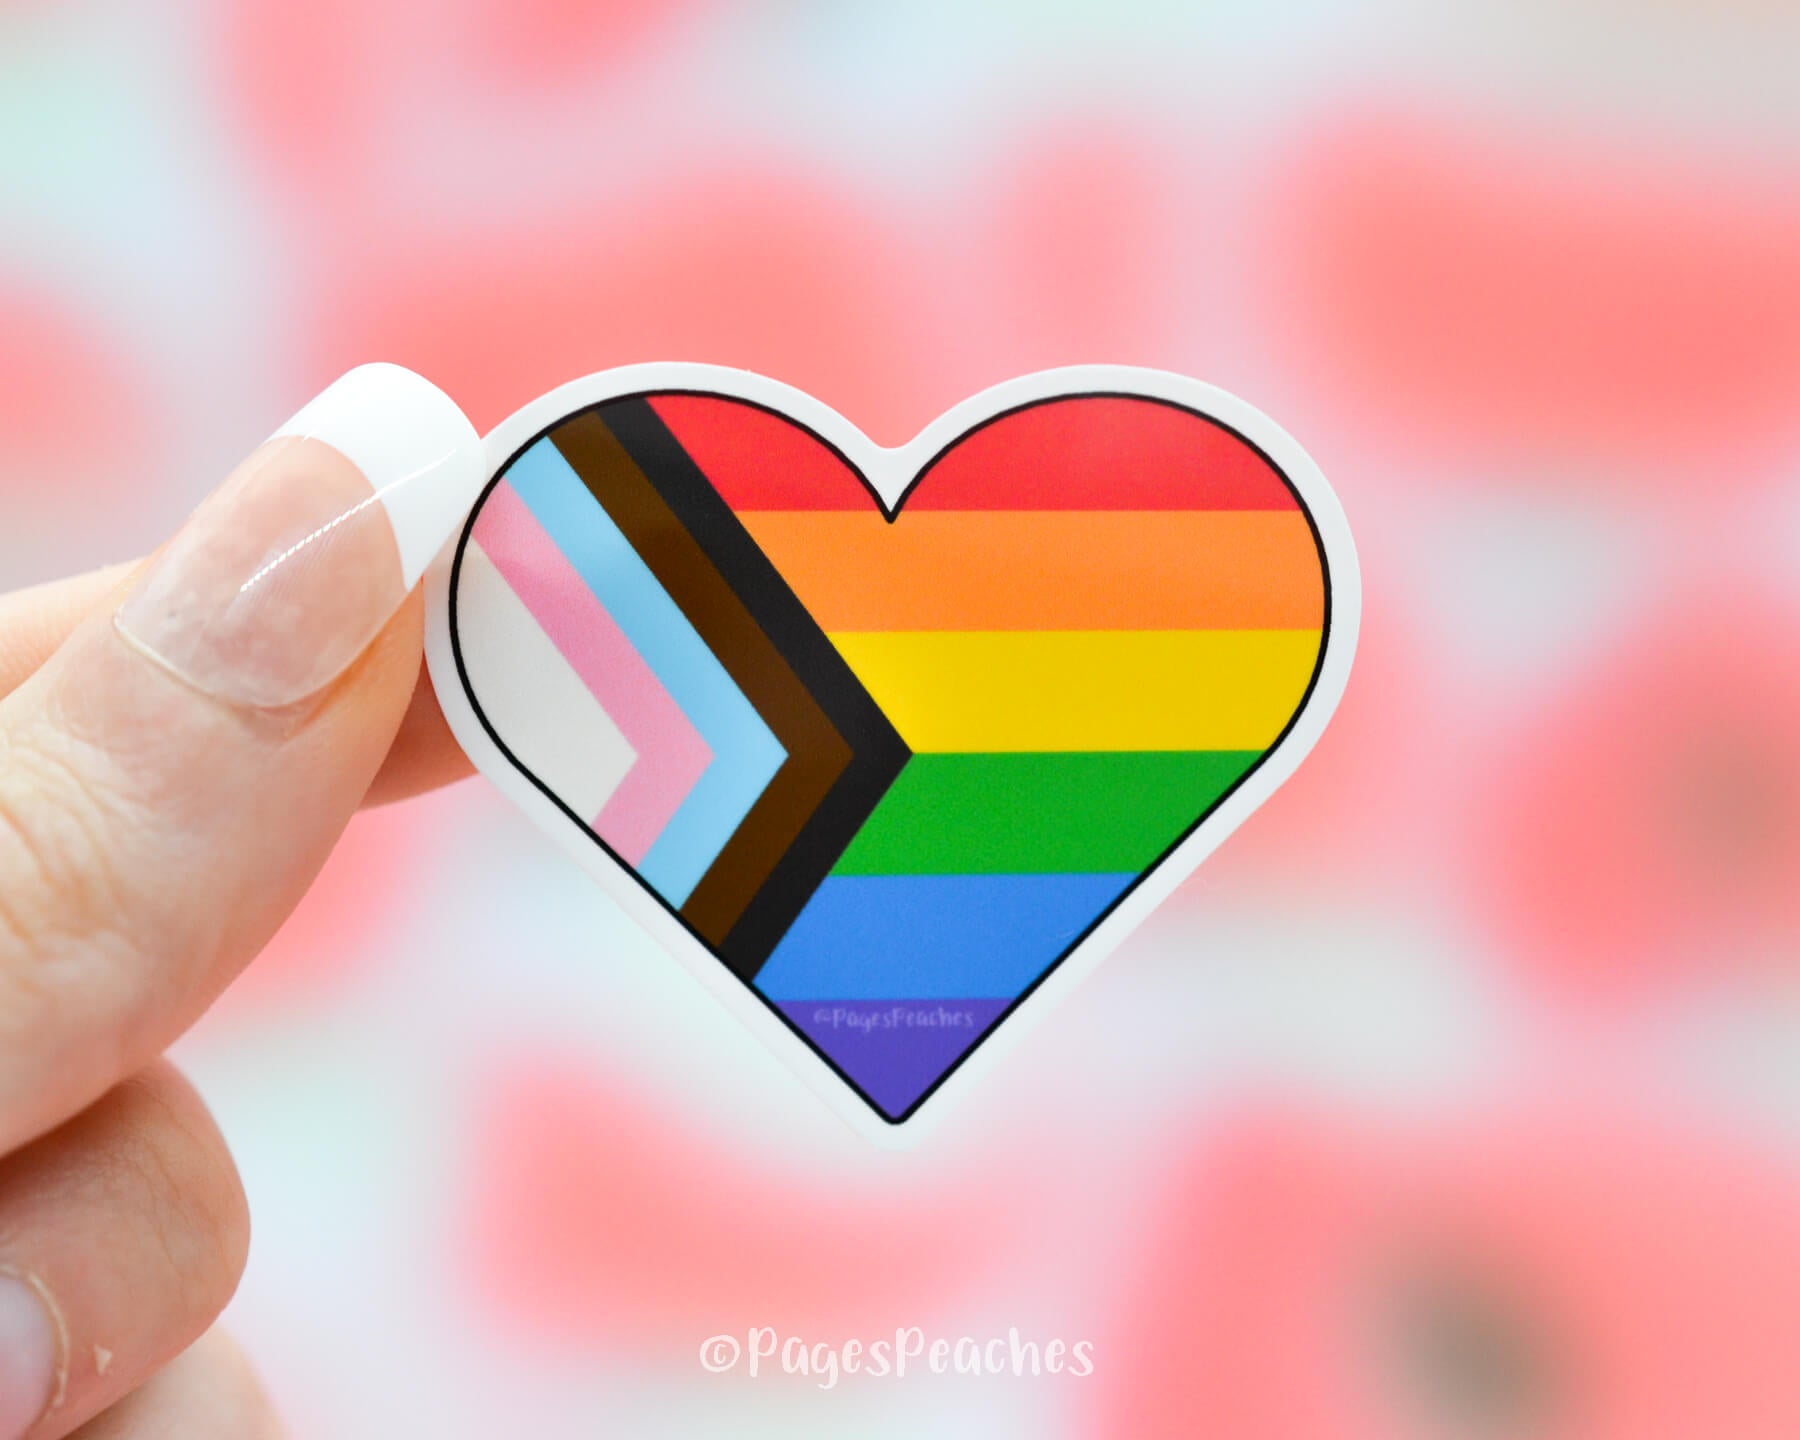 Sticker of an inclusive LGBTQ progress pride flag shaped in a heart